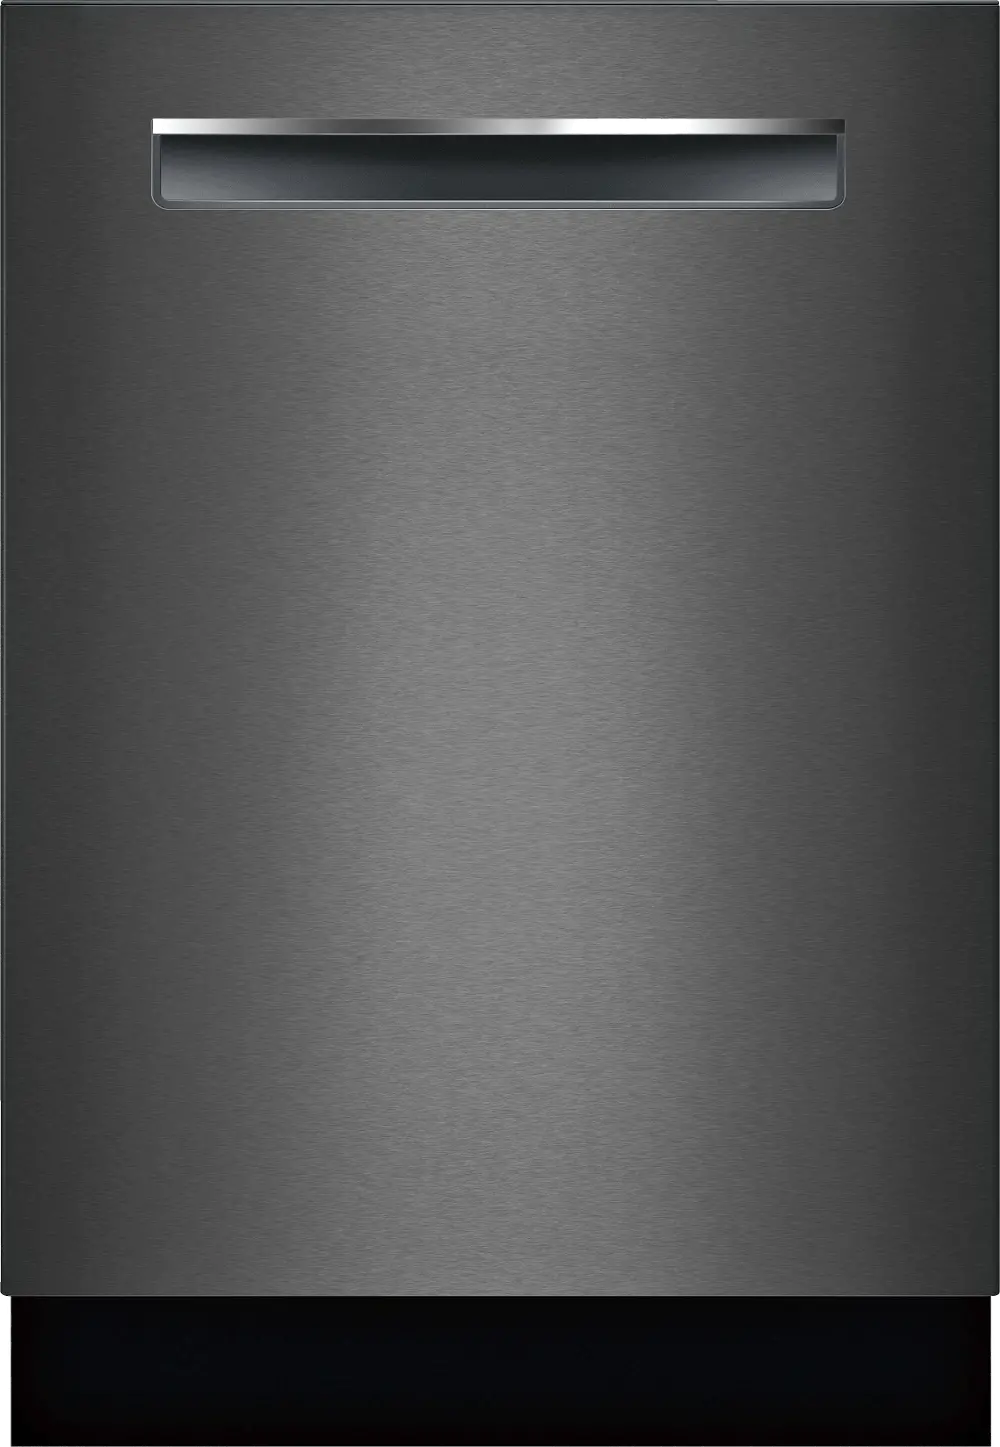 SHPM78Z54N Bosch 800 Series Premium Top Control Dishwasher - Black Stainless Steel-1